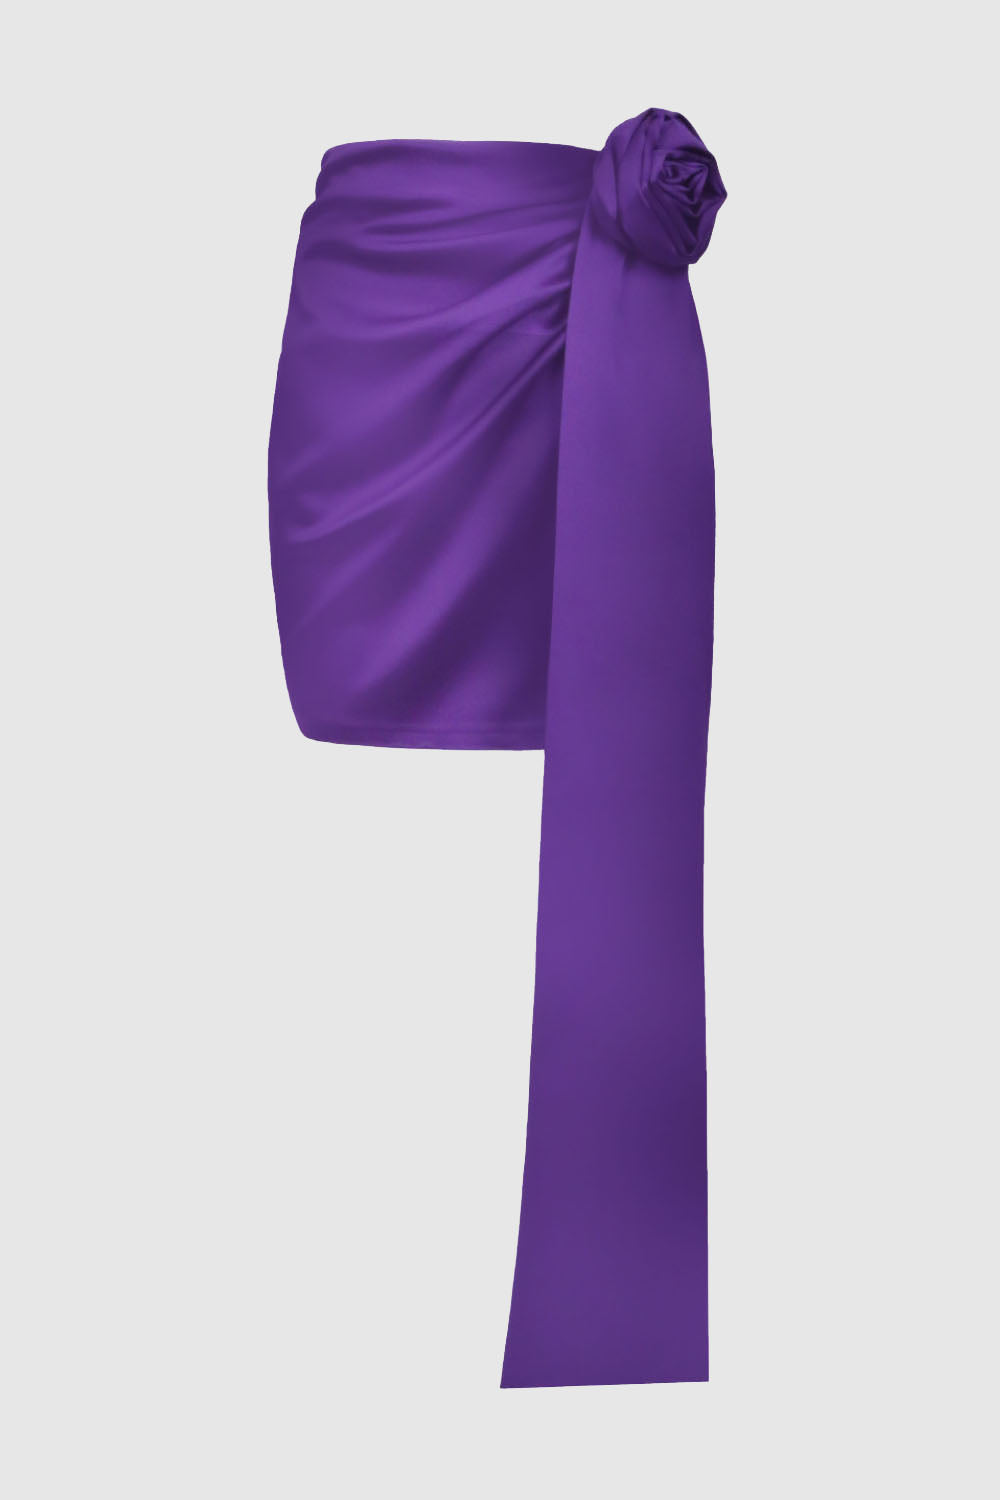 Maia Purple Flower Skirt